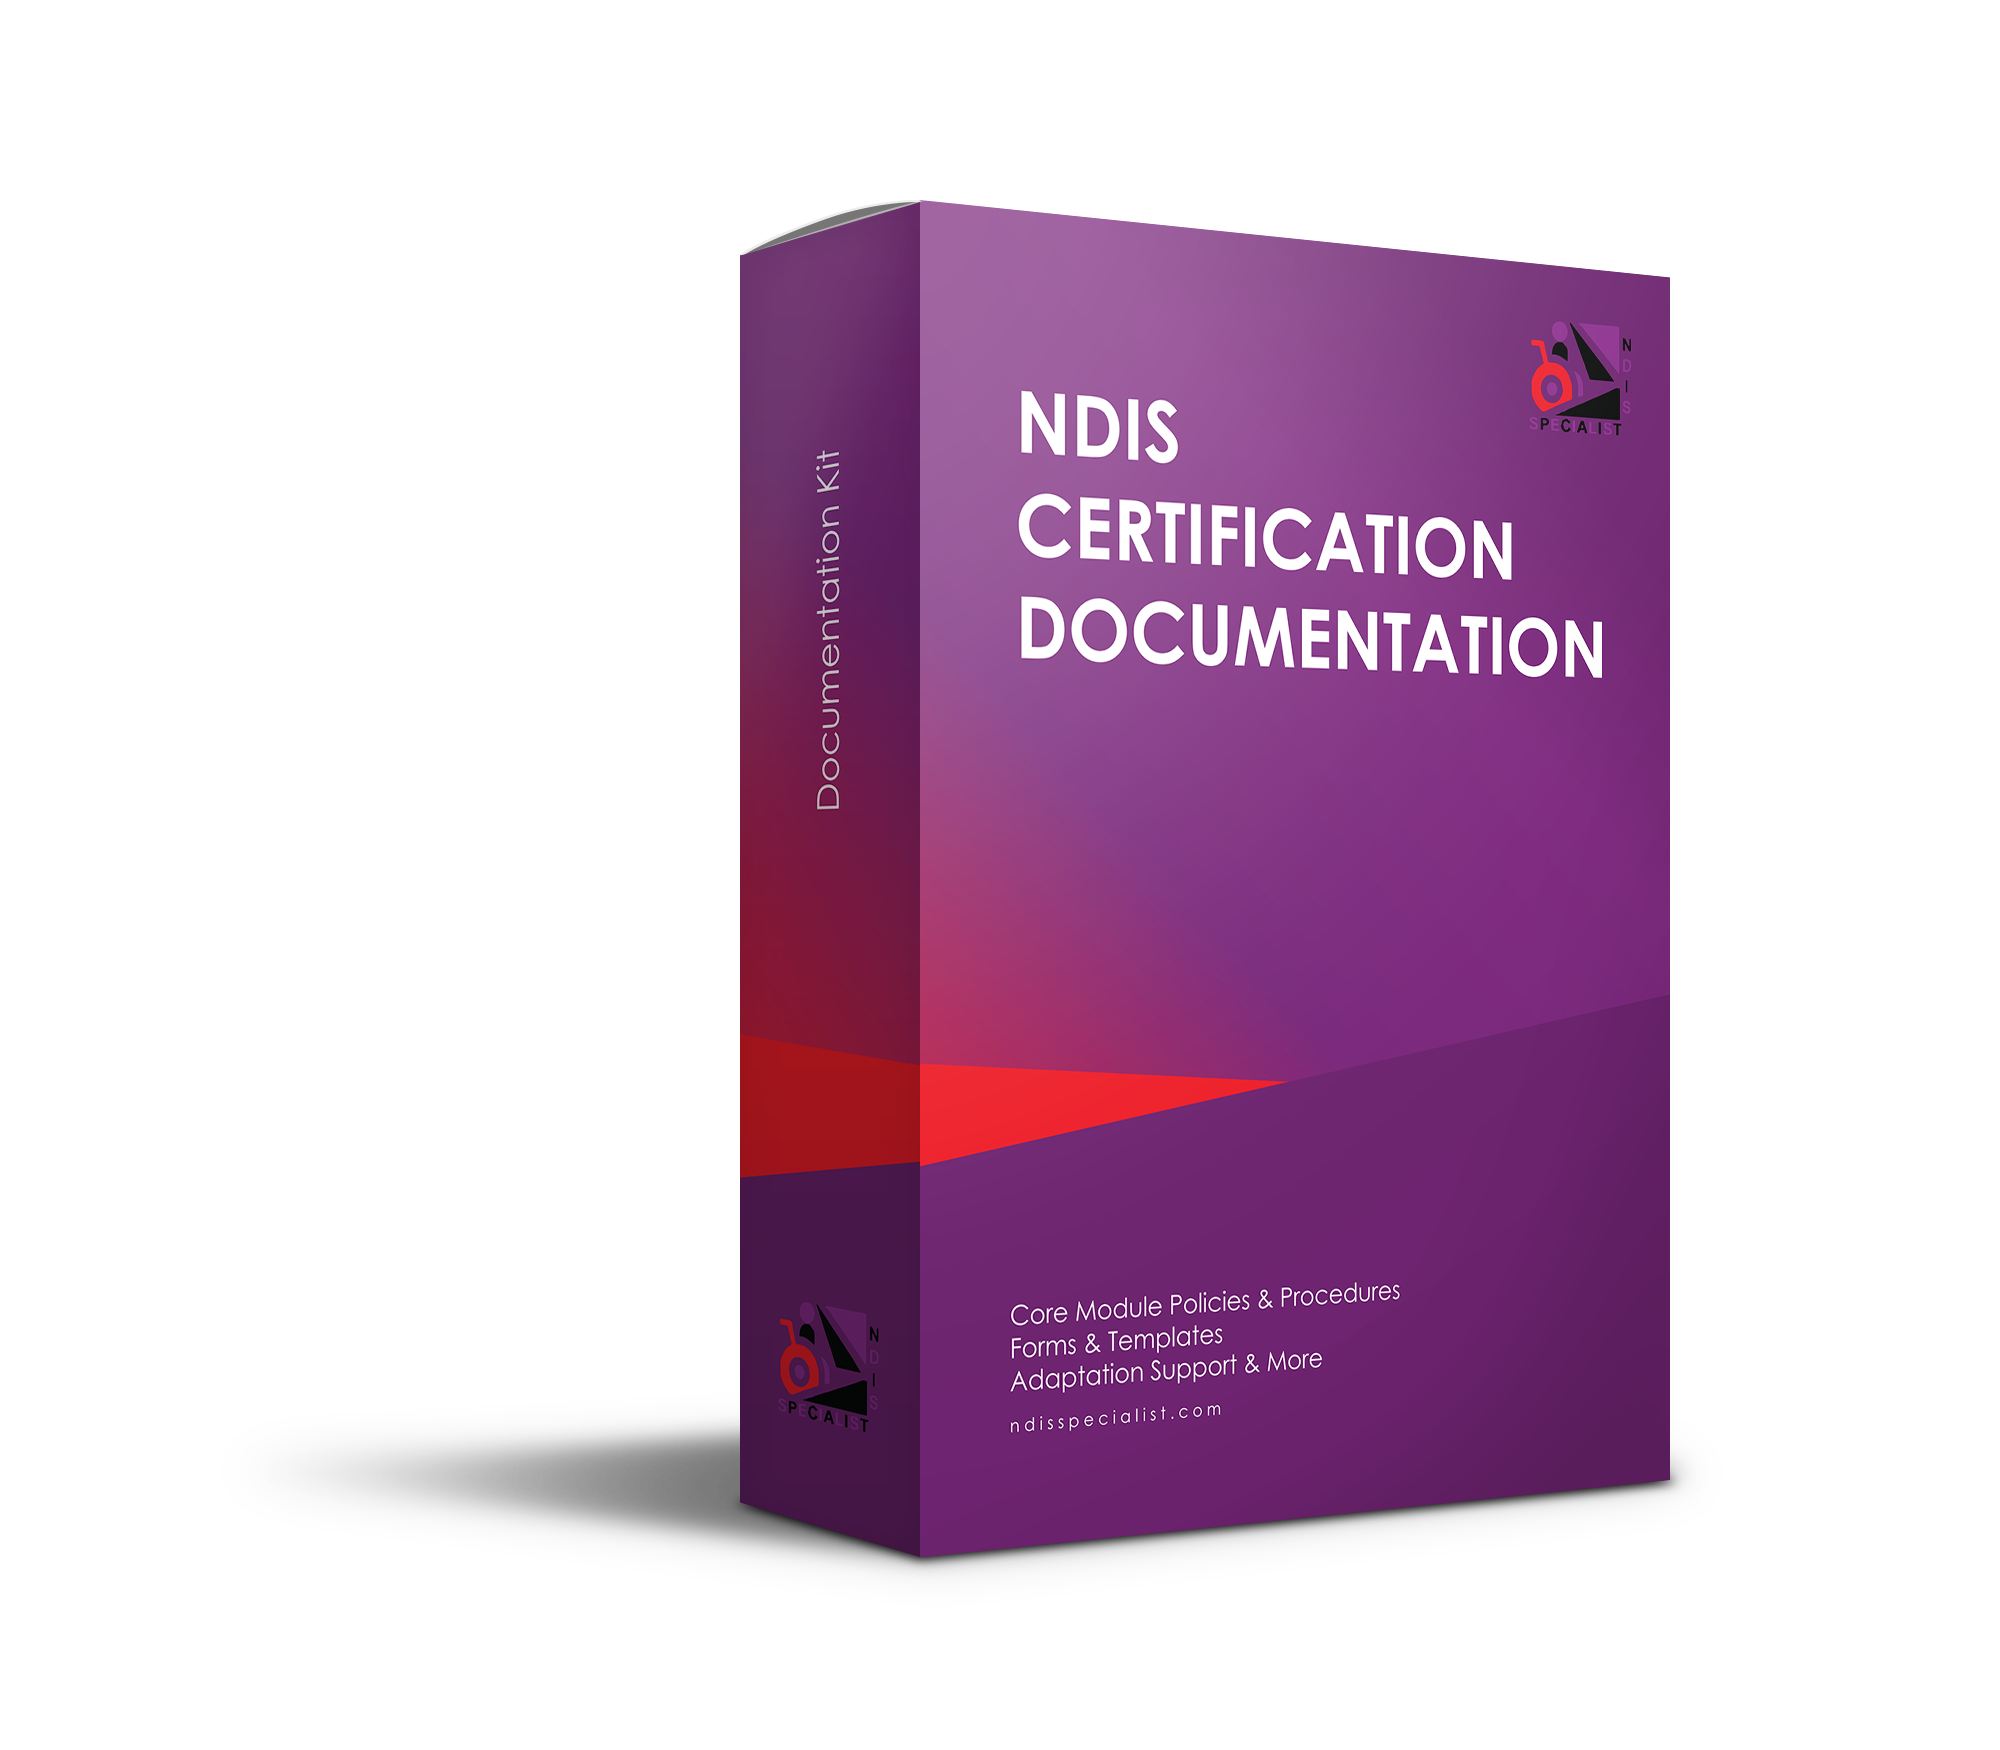 NDIS Certification Documentation